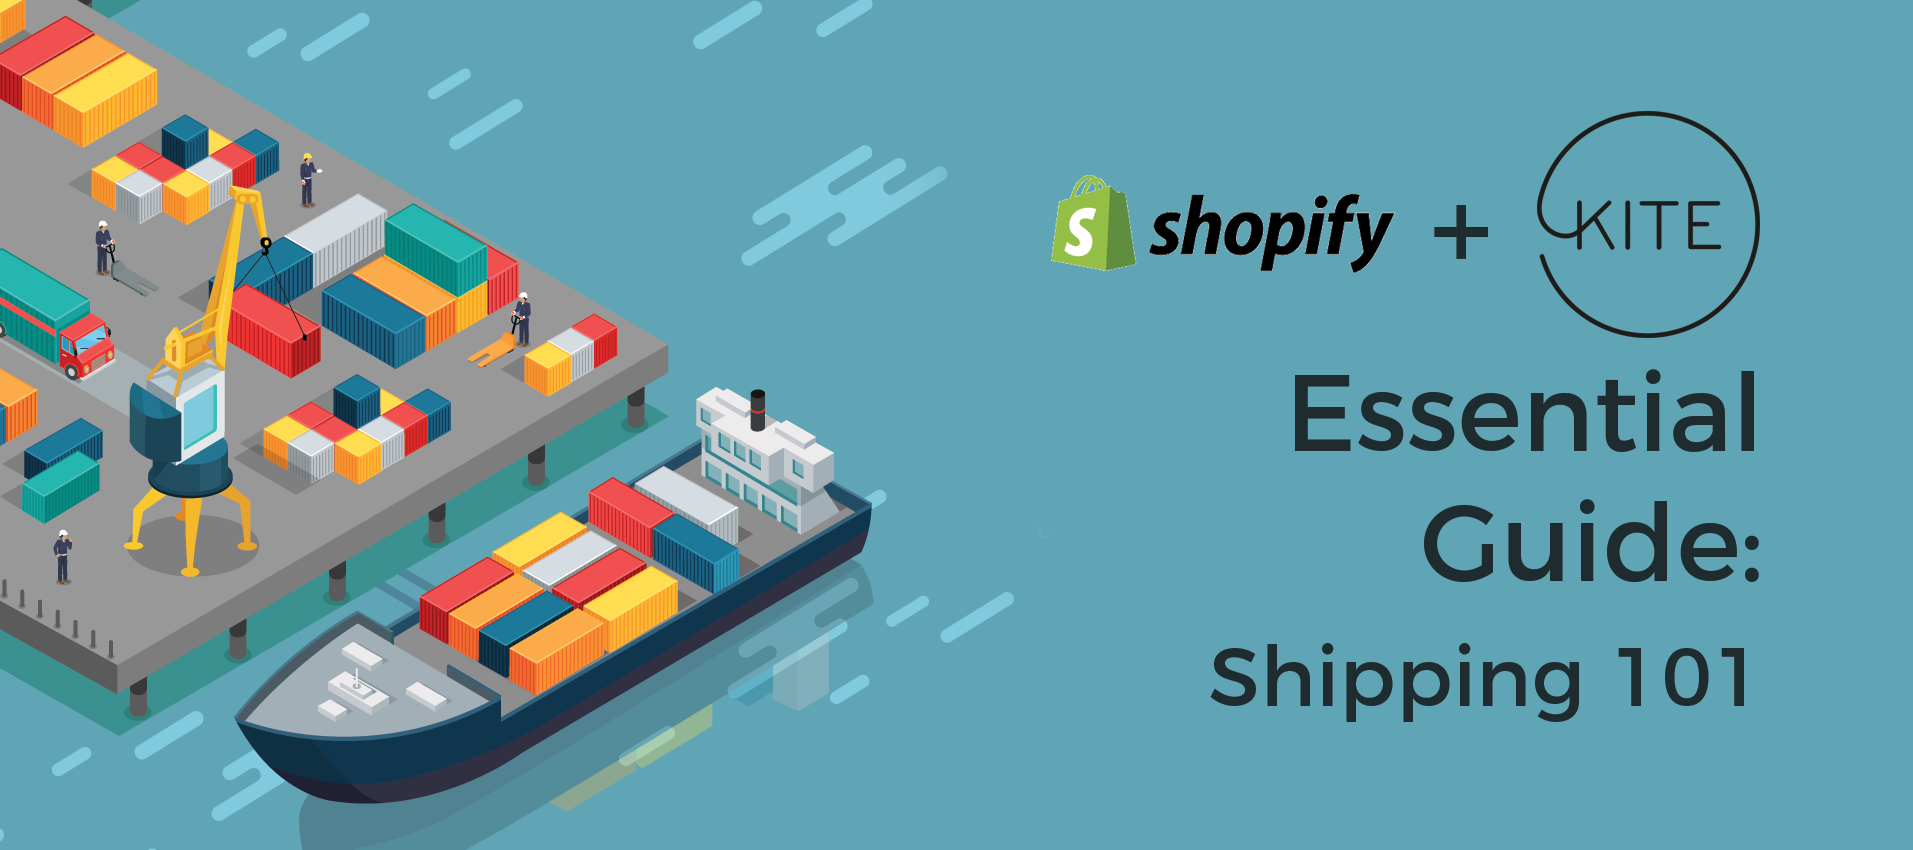 Kite + Shopify: Shipping 101